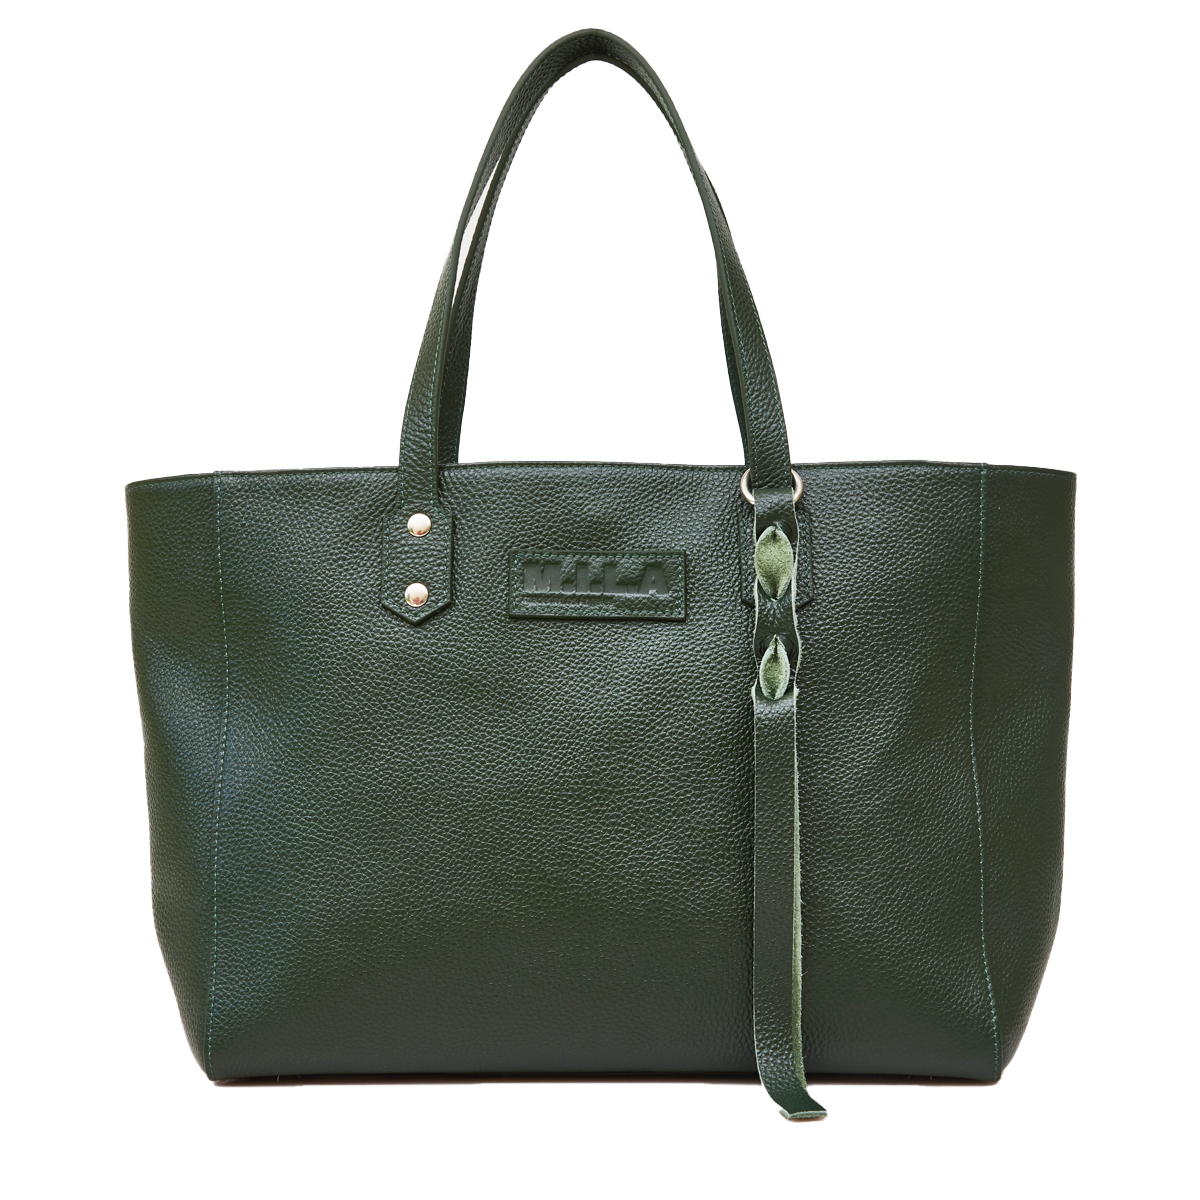 Luxury Handbags in the Shop Stock Photo - Image of luggage